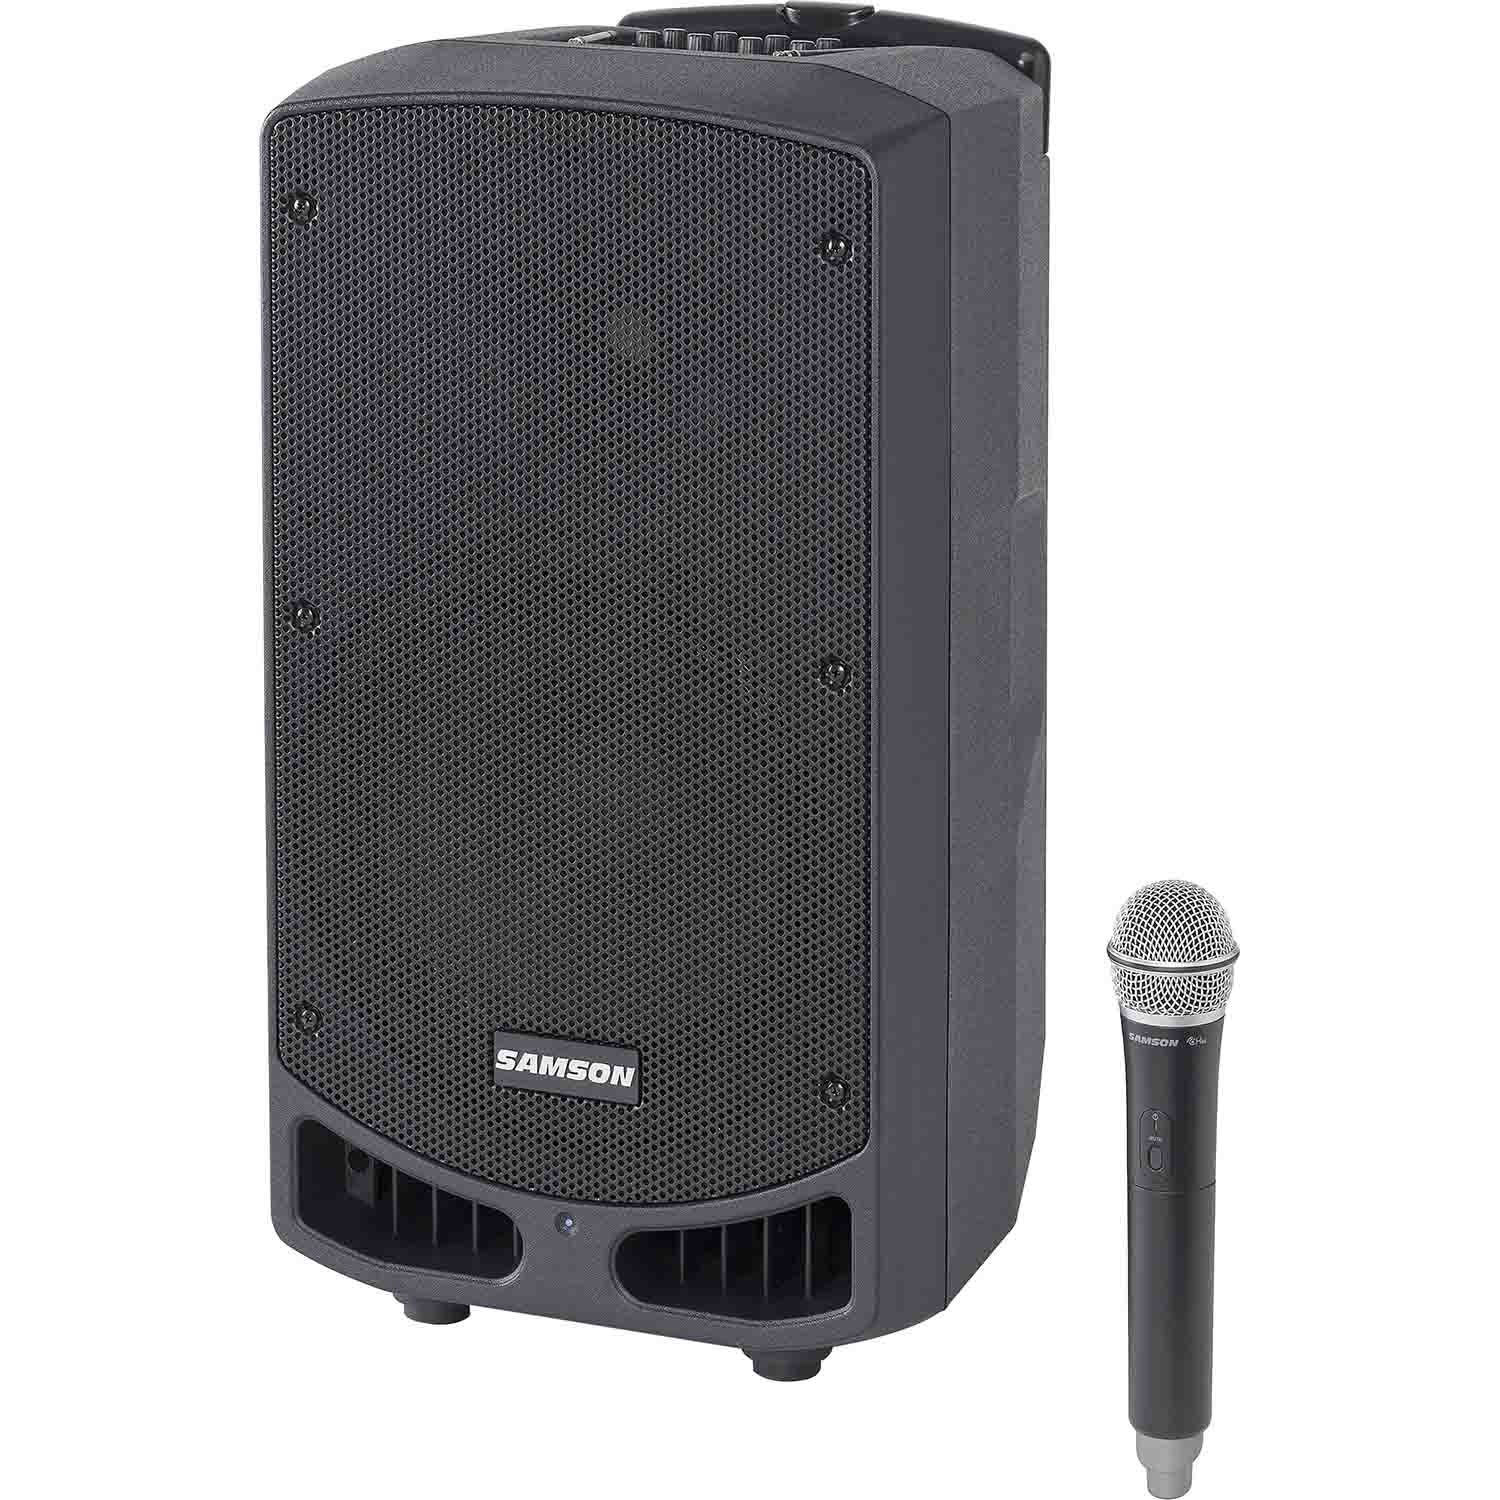 Samson SAXP310W-K Portable PA System with Wireless Microphone - K: 470 to 494 MHz - Hollywood DJ